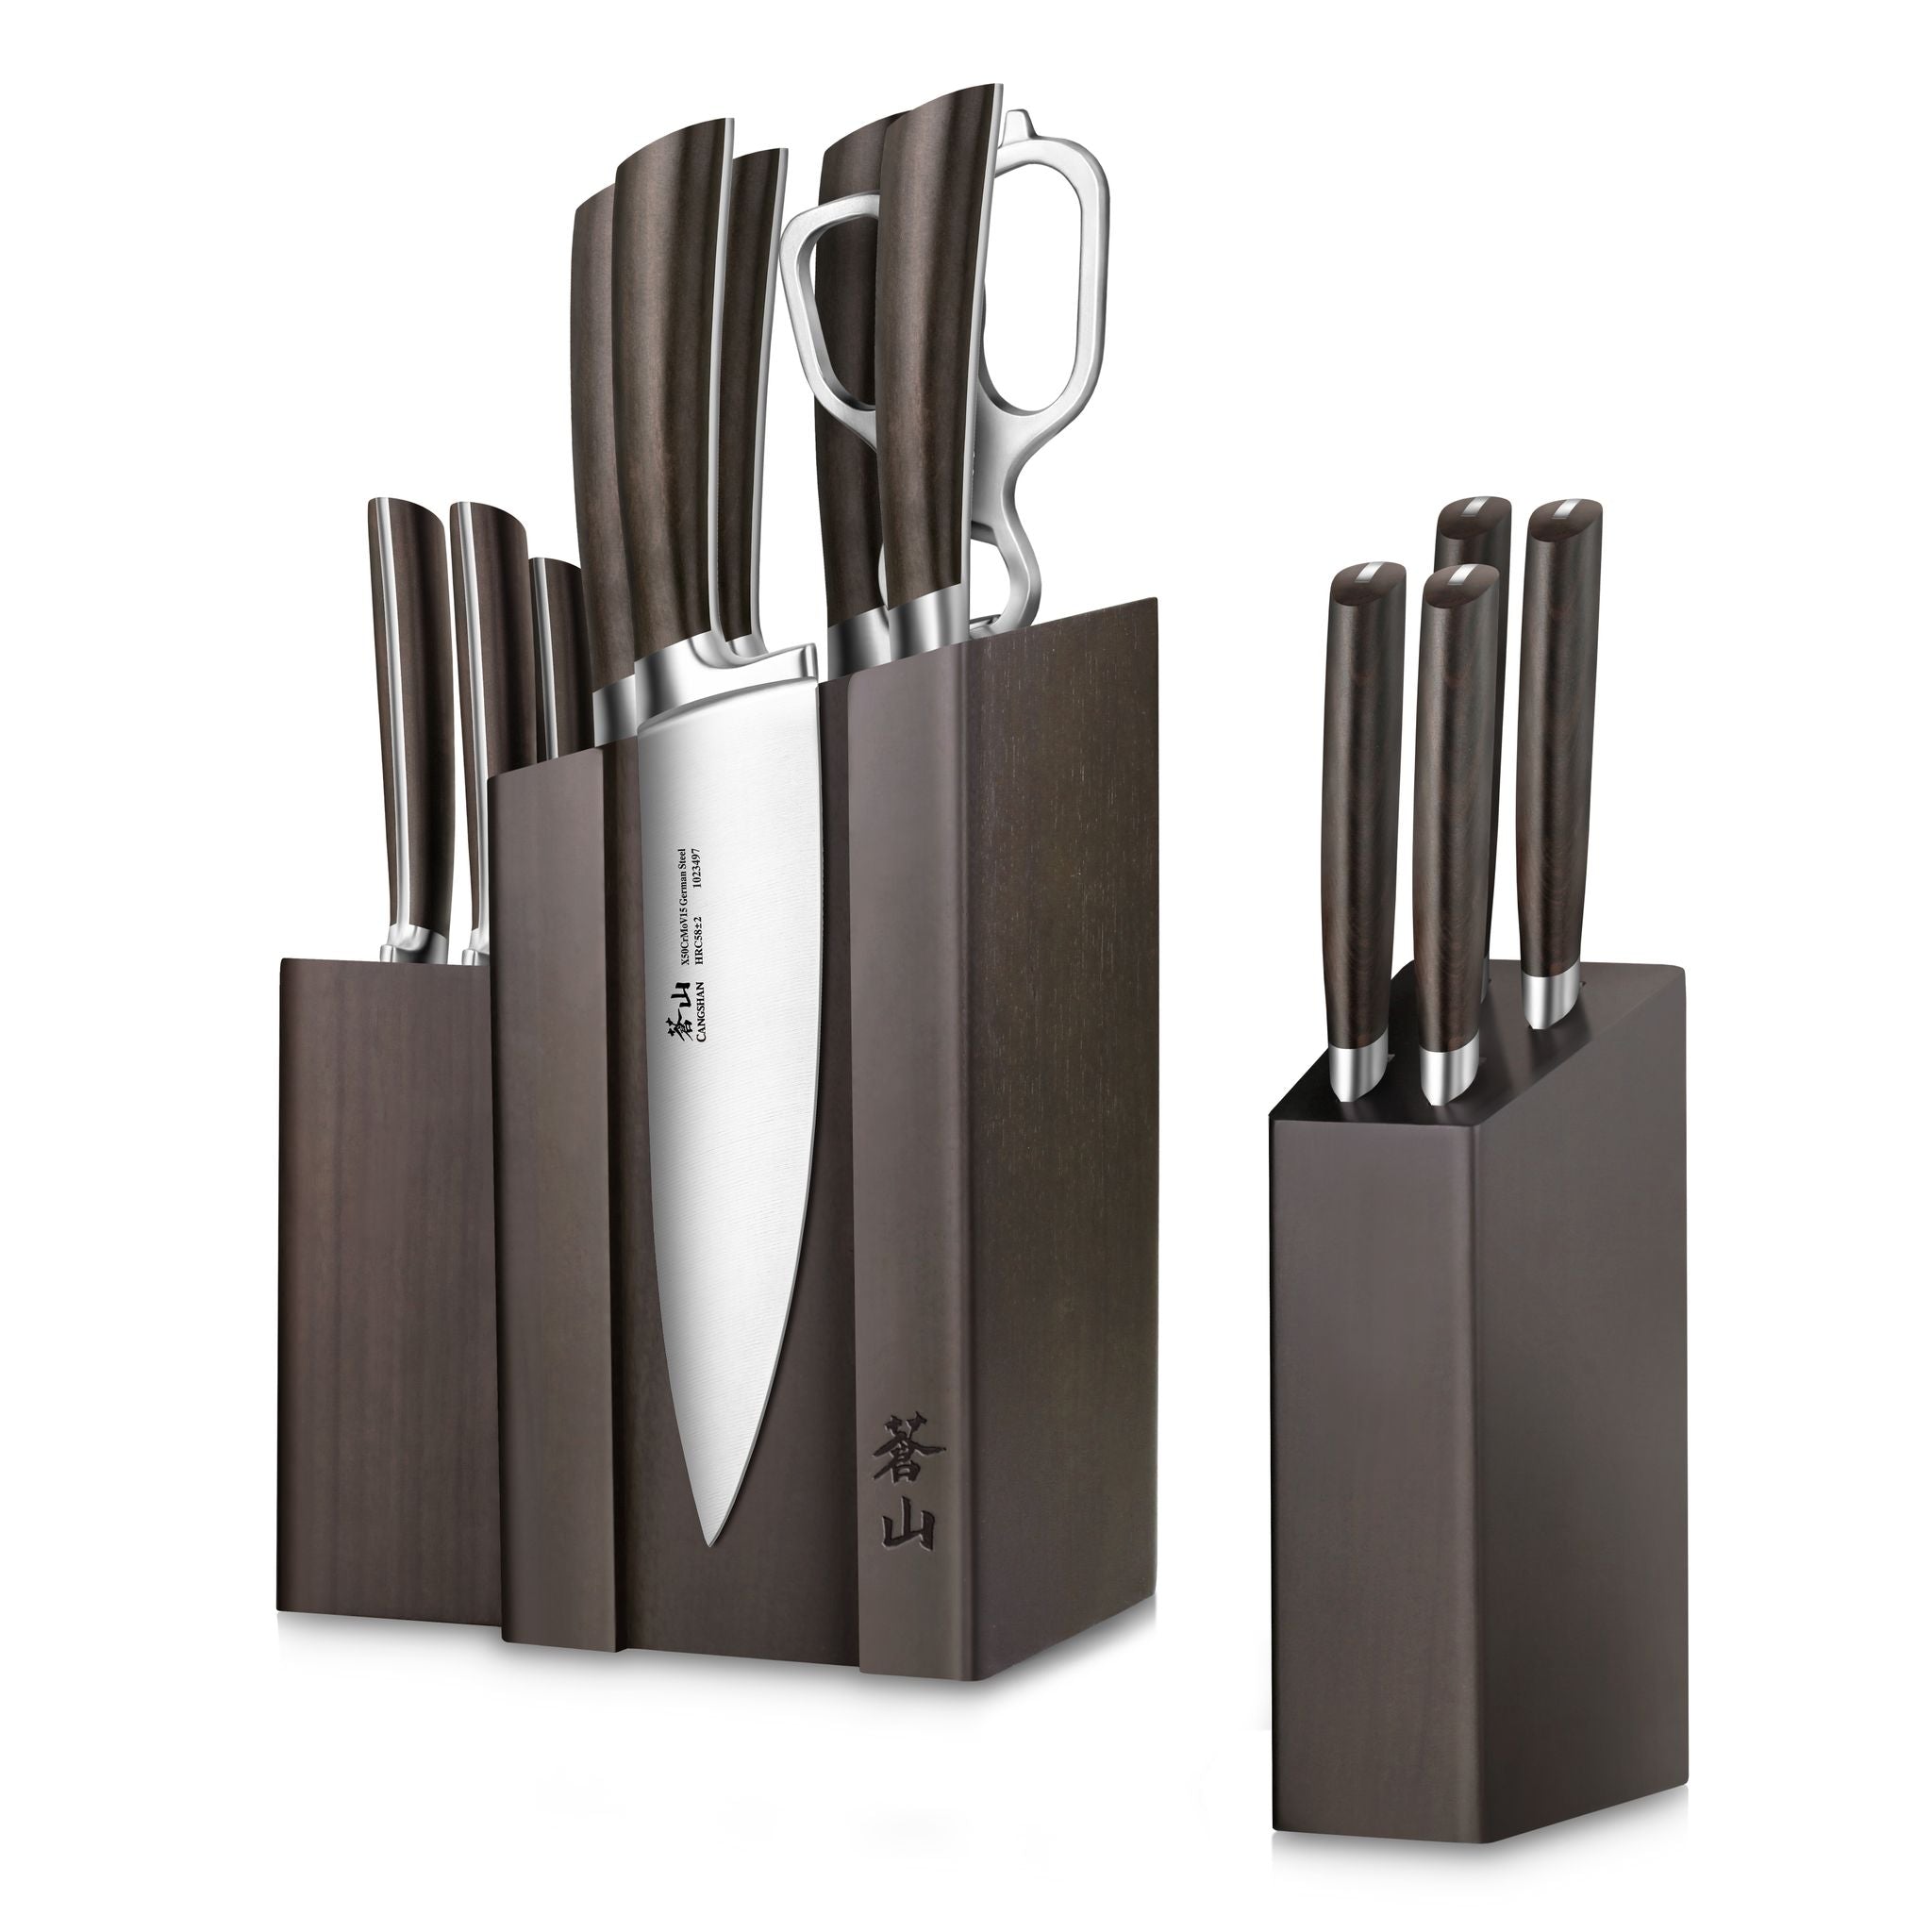  Cangshan N1 Series 1022377 23-Piece German Steel Forged Knife  Block Set, Walnut Block: Home & Kitchen